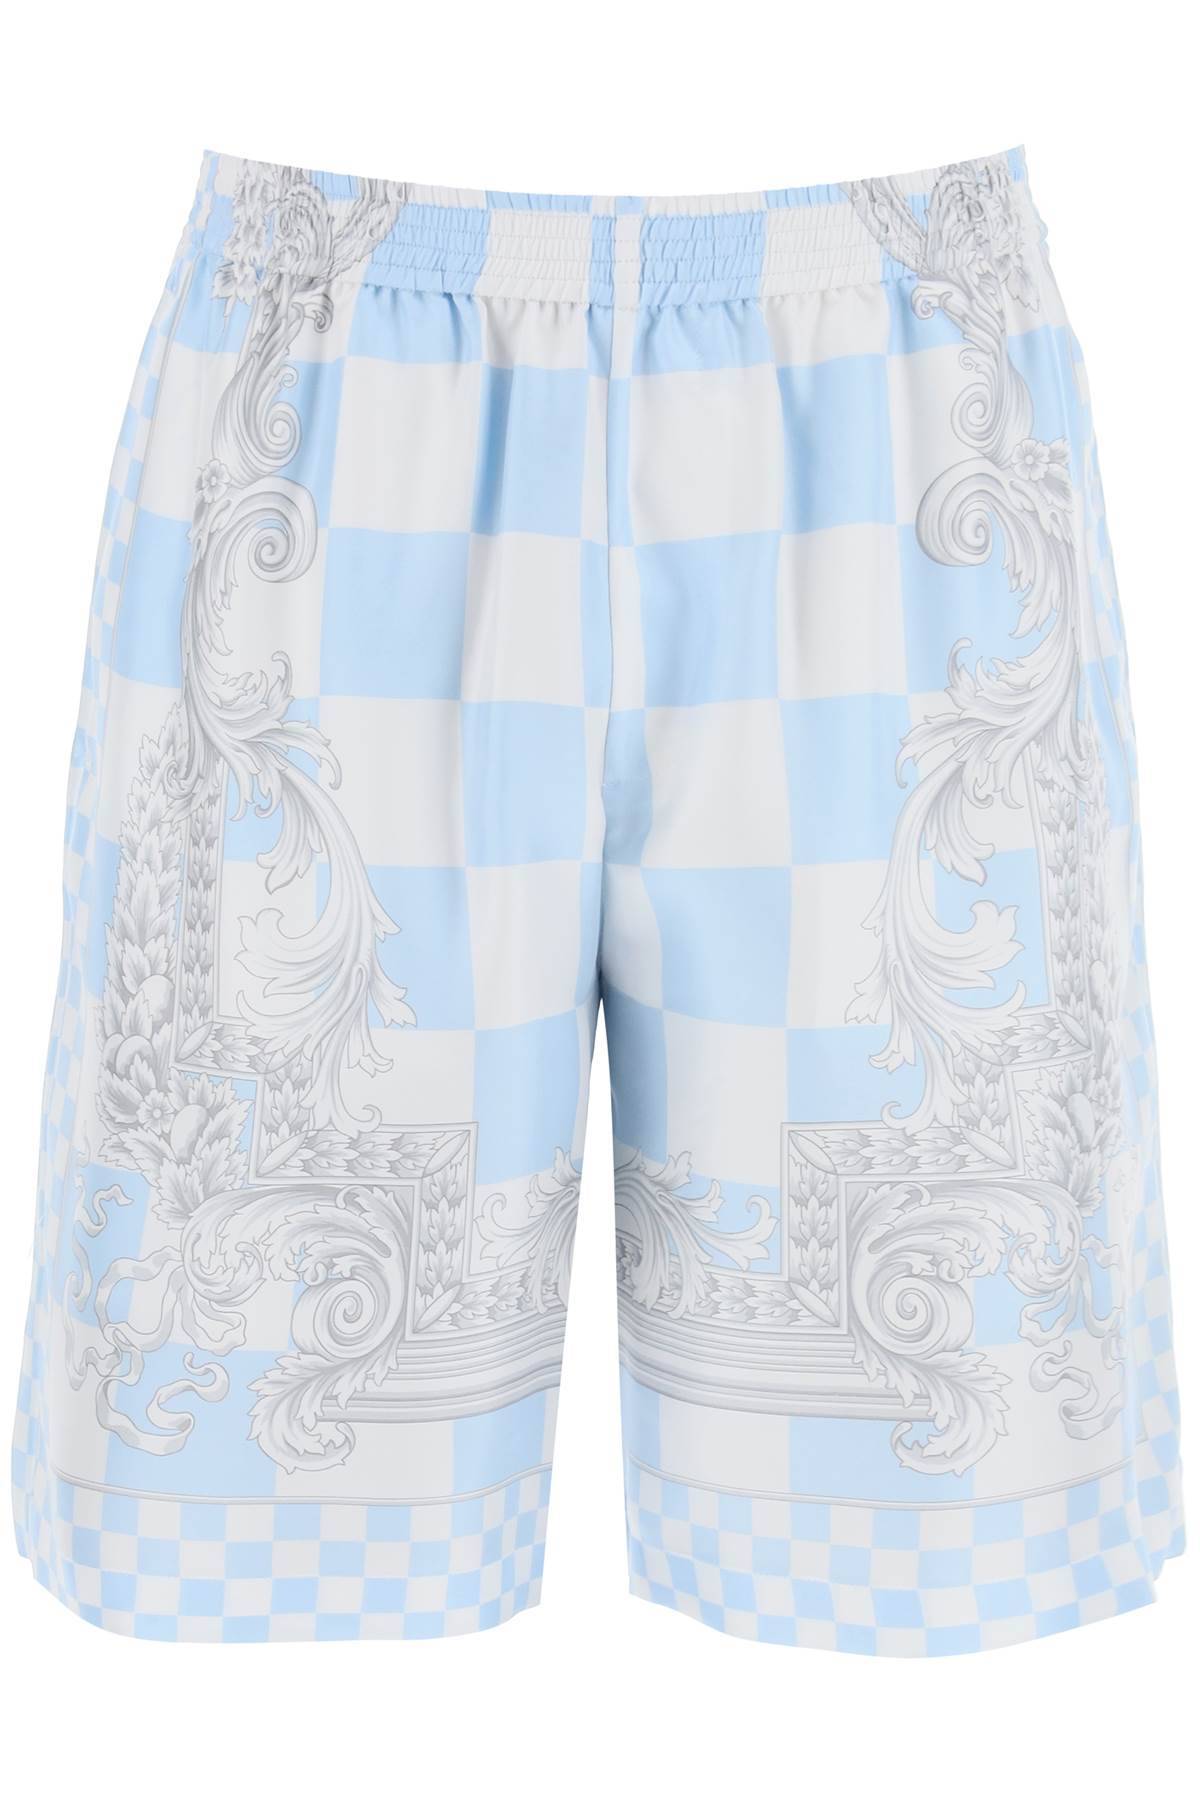 Versace VERSACE printed silk bermuda shorts set